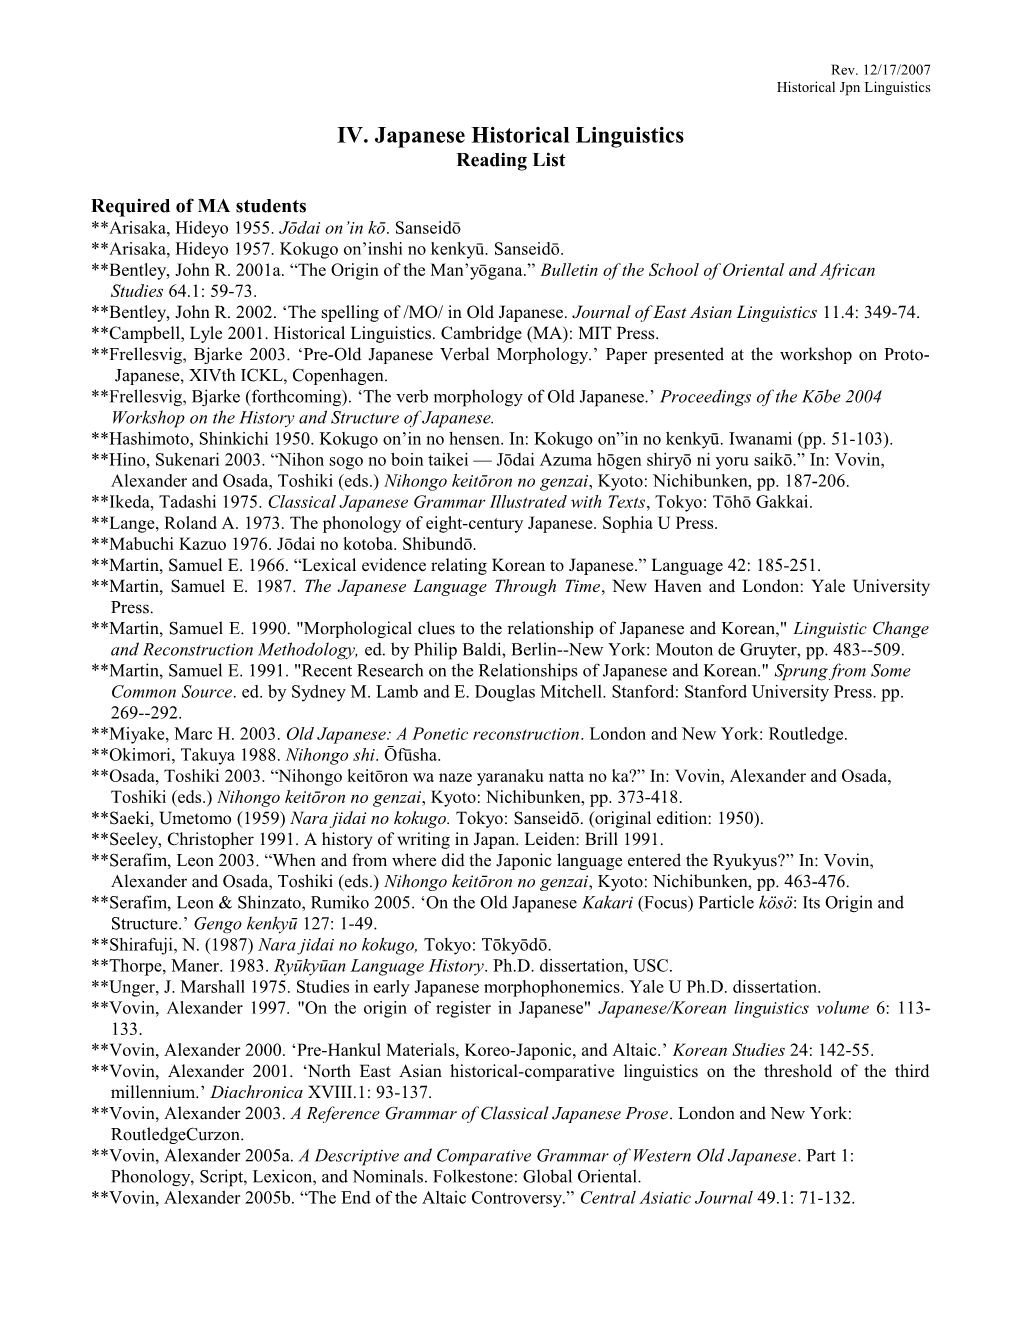 Reading List for Japanese Historical Linguistics